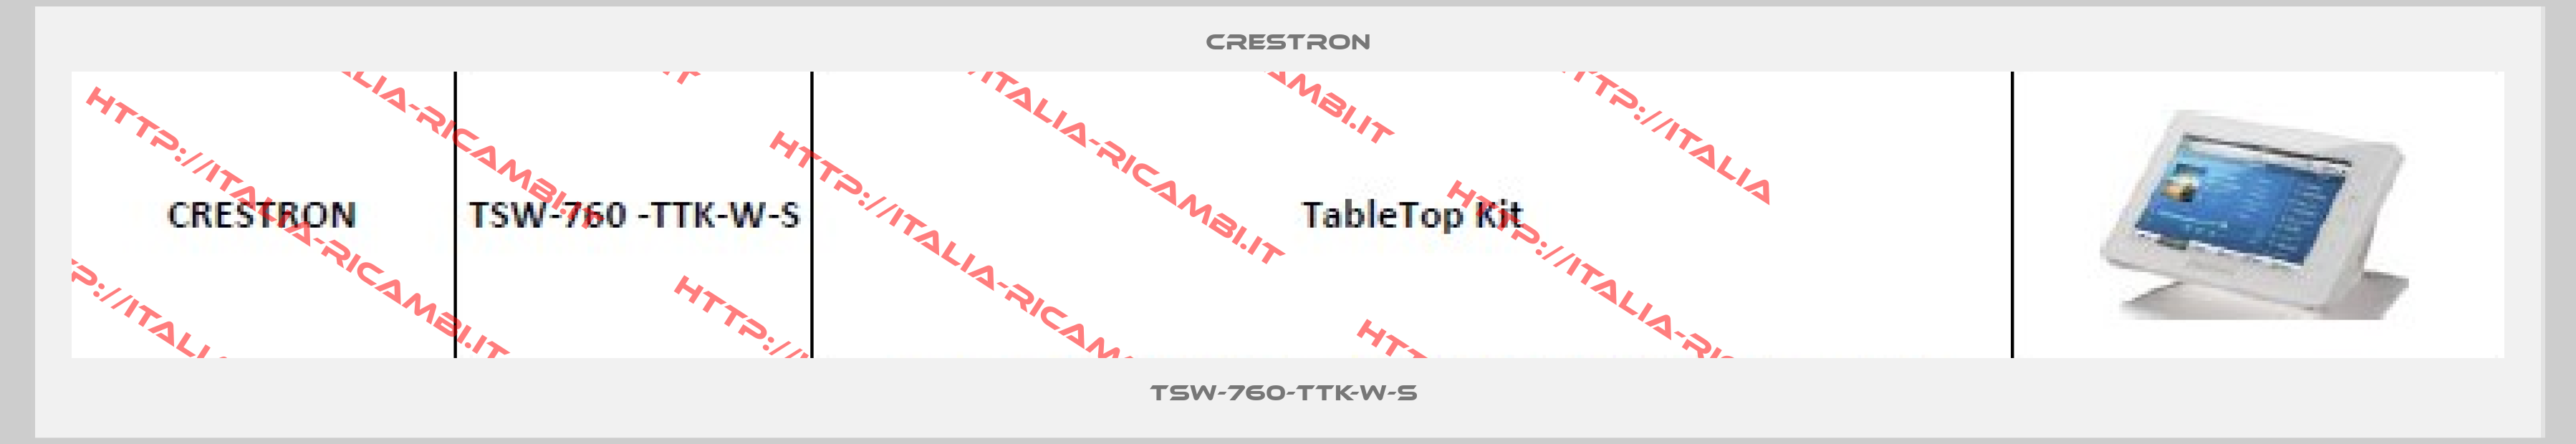 Crestron-TSW-760-TTK-W-S 